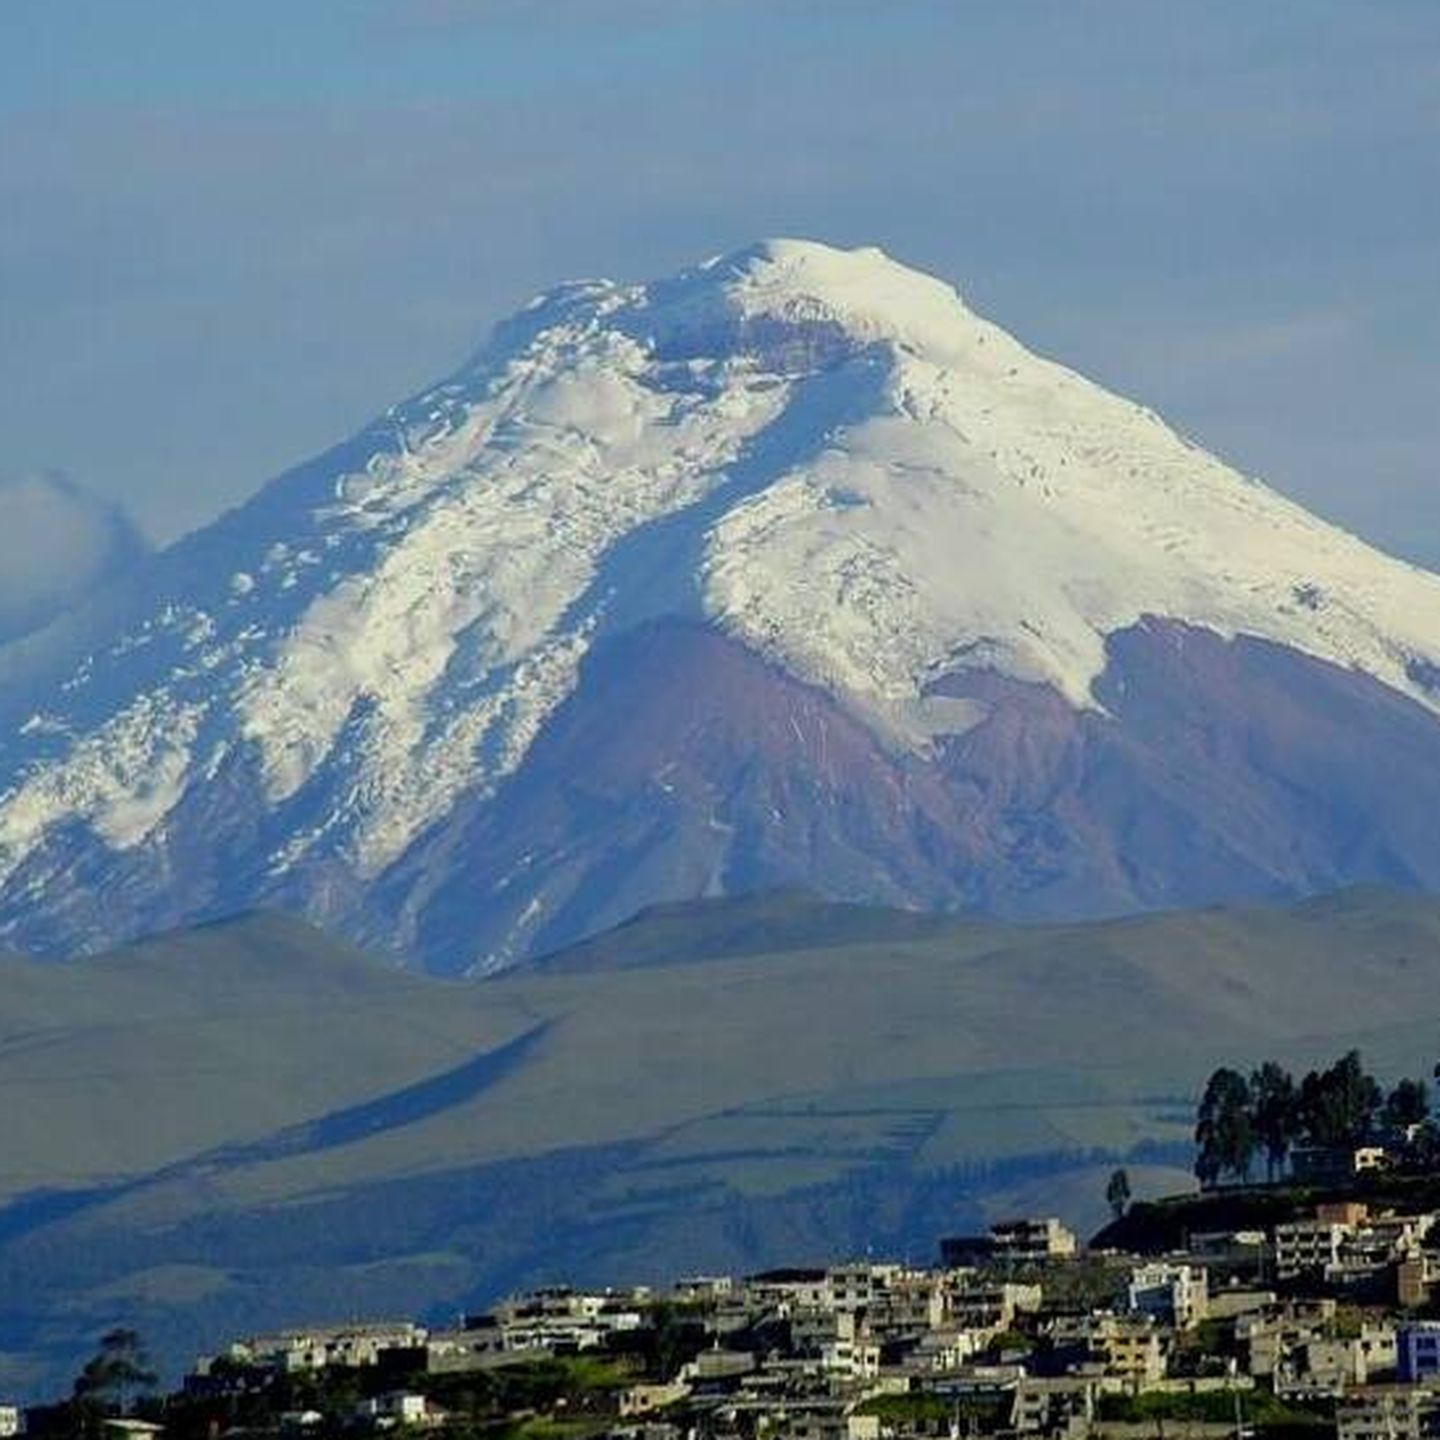 Quito vive rodeada de volcanes como el Cotopaxi. (Ministerio de Turismo de Ecuador)